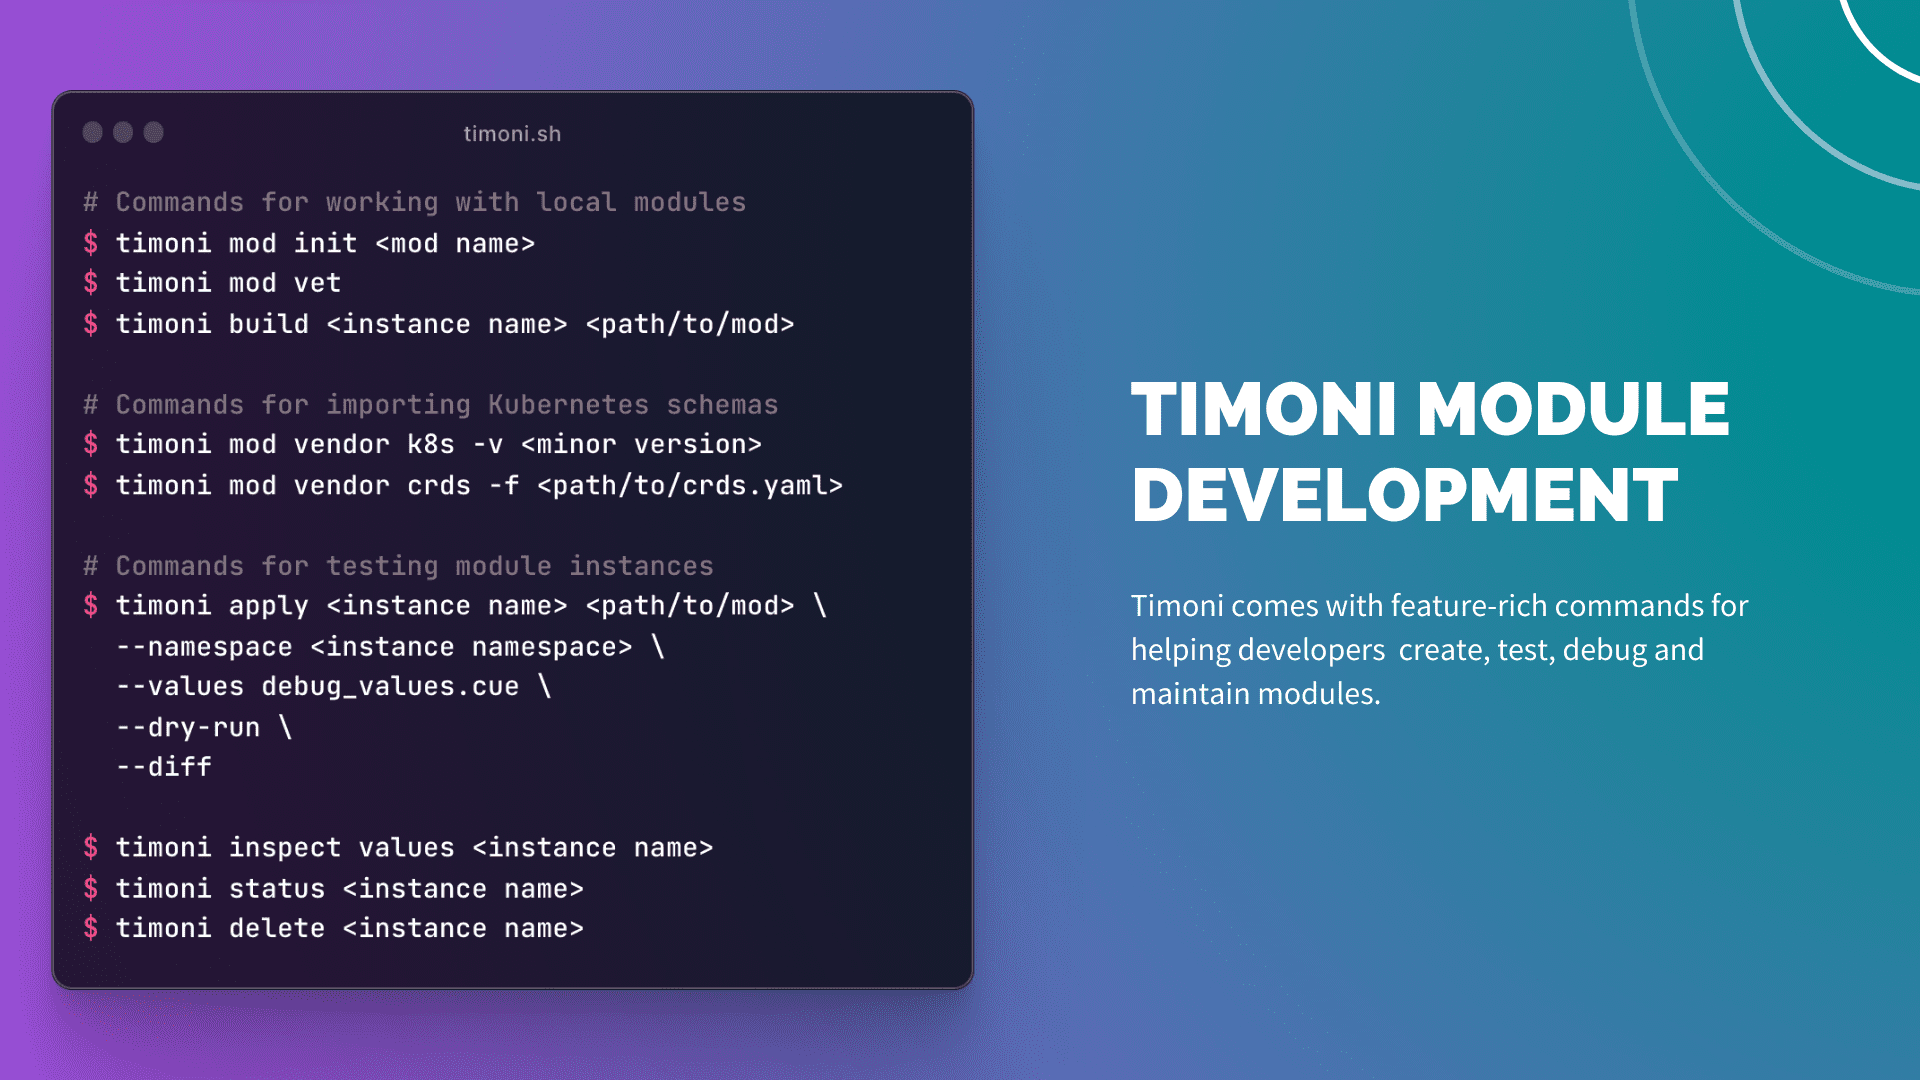 Timoni module development